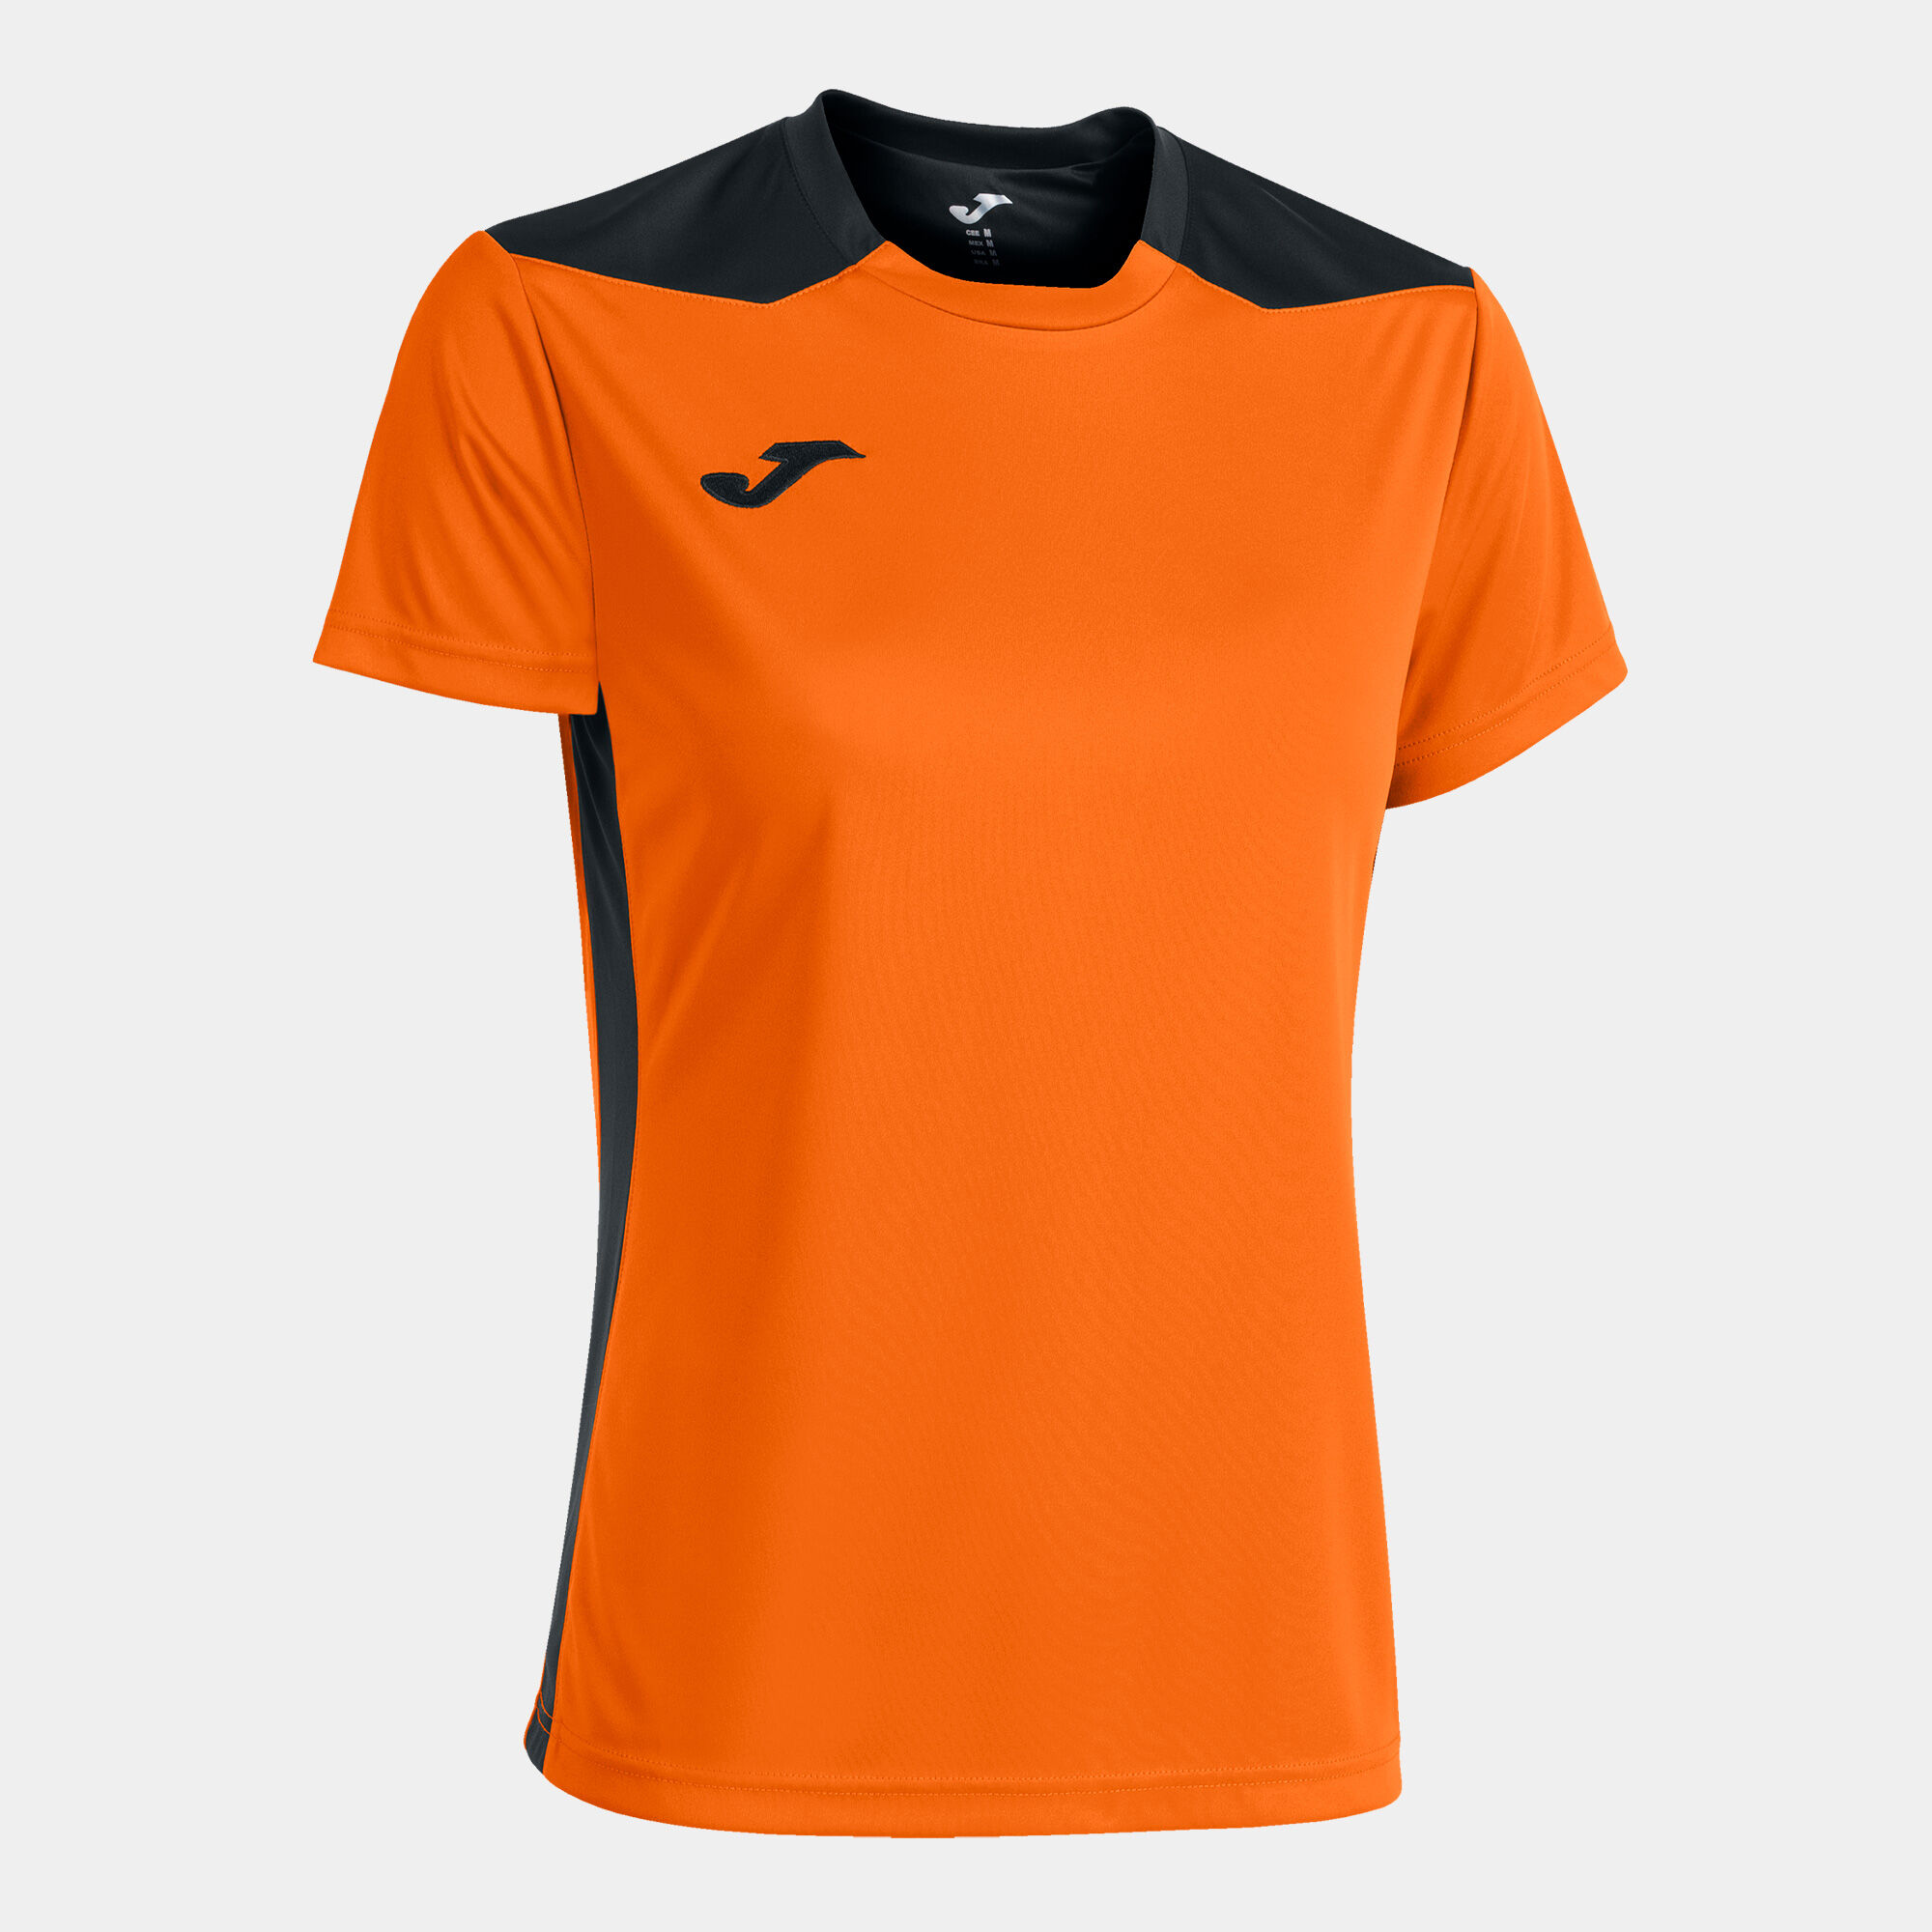 Shirt short sleeve woman Championship VI orange black